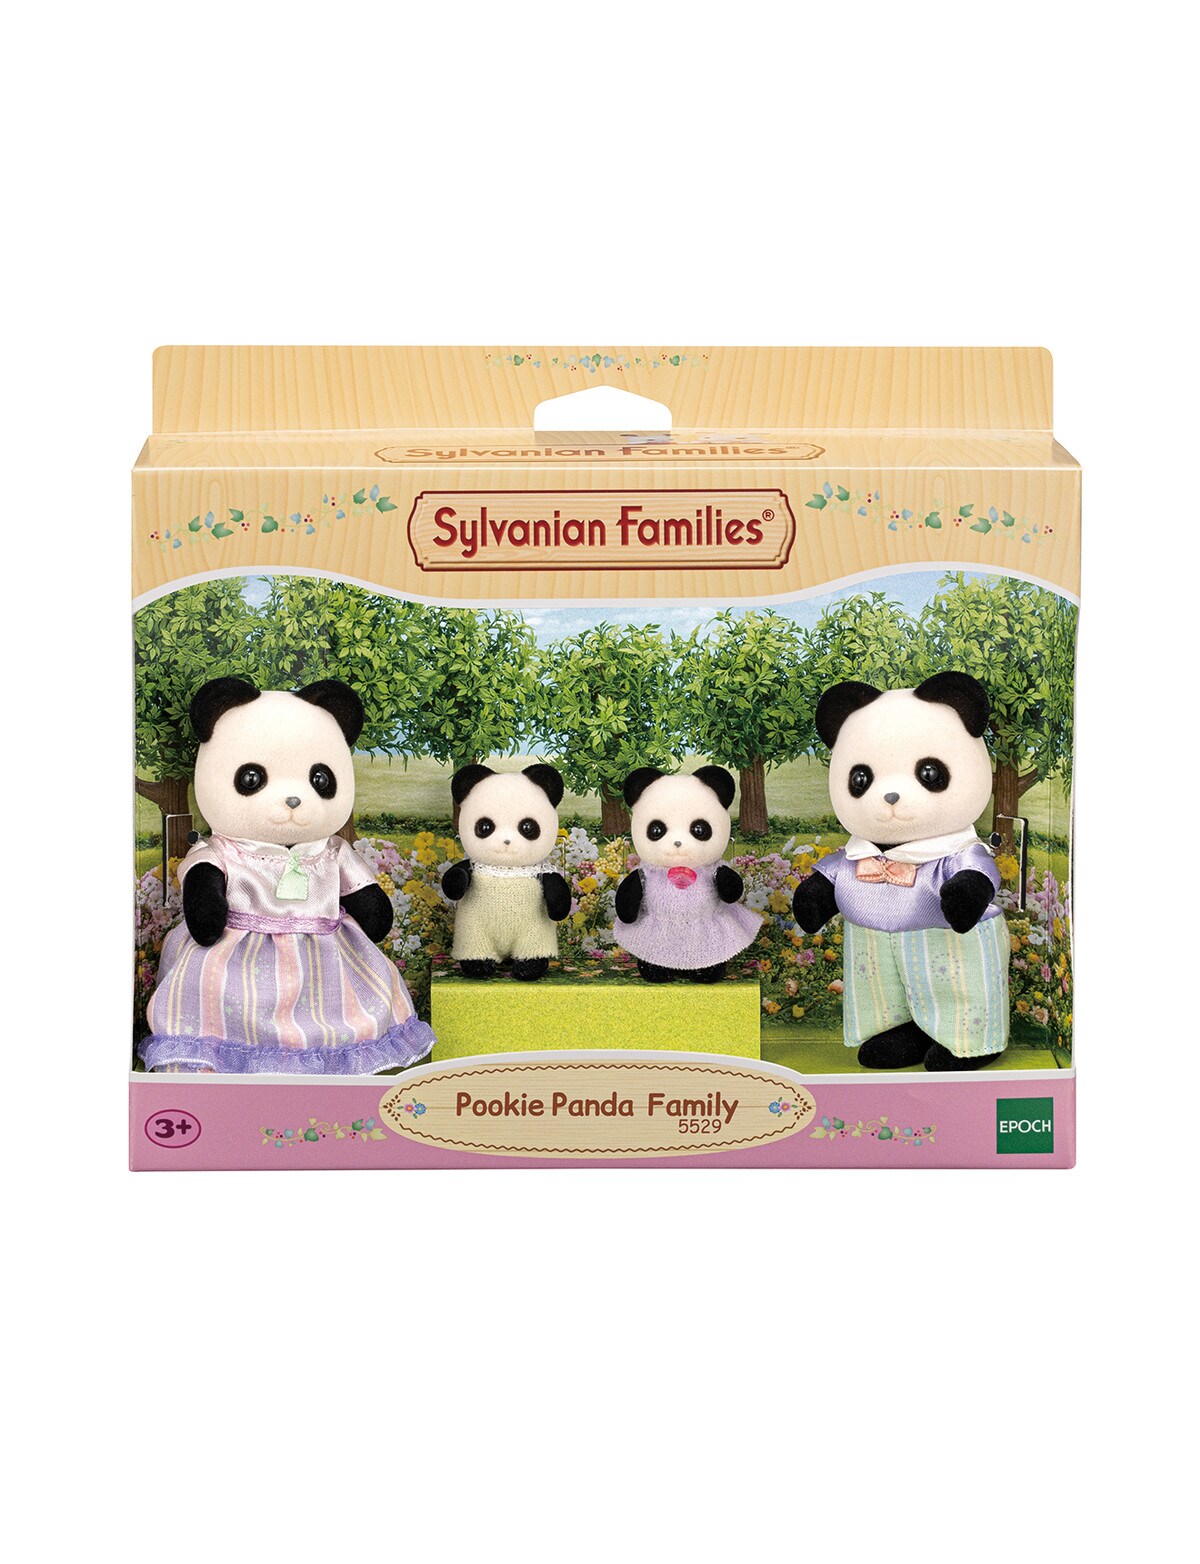 Dolls - & Accessories Family Families Sylvanian Pookie Panda